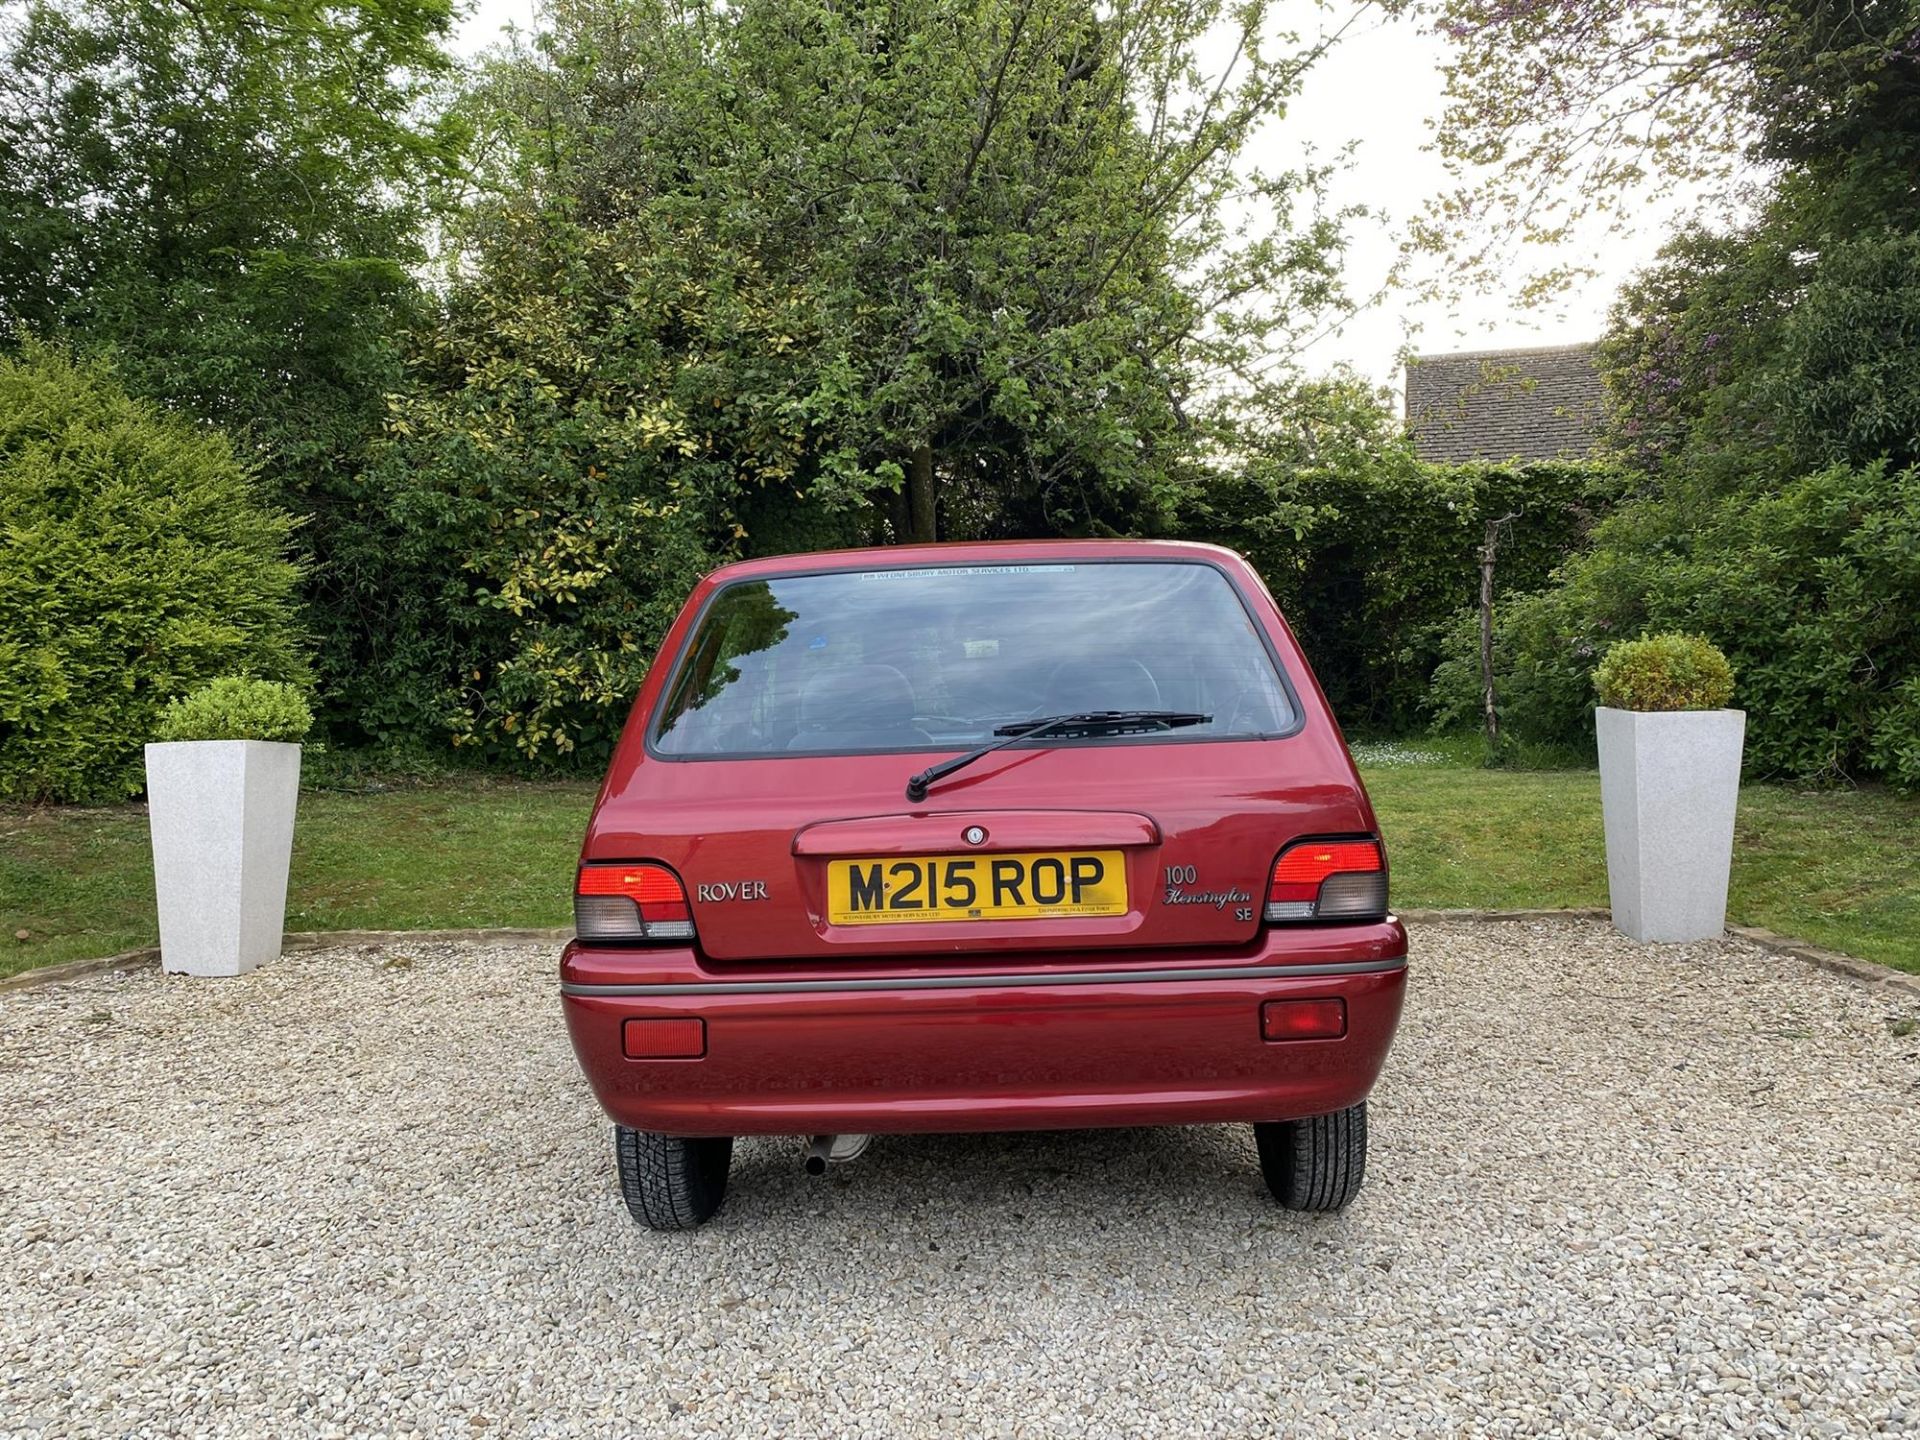 1995 Rover 100 Kensington SE - Image 5 of 10